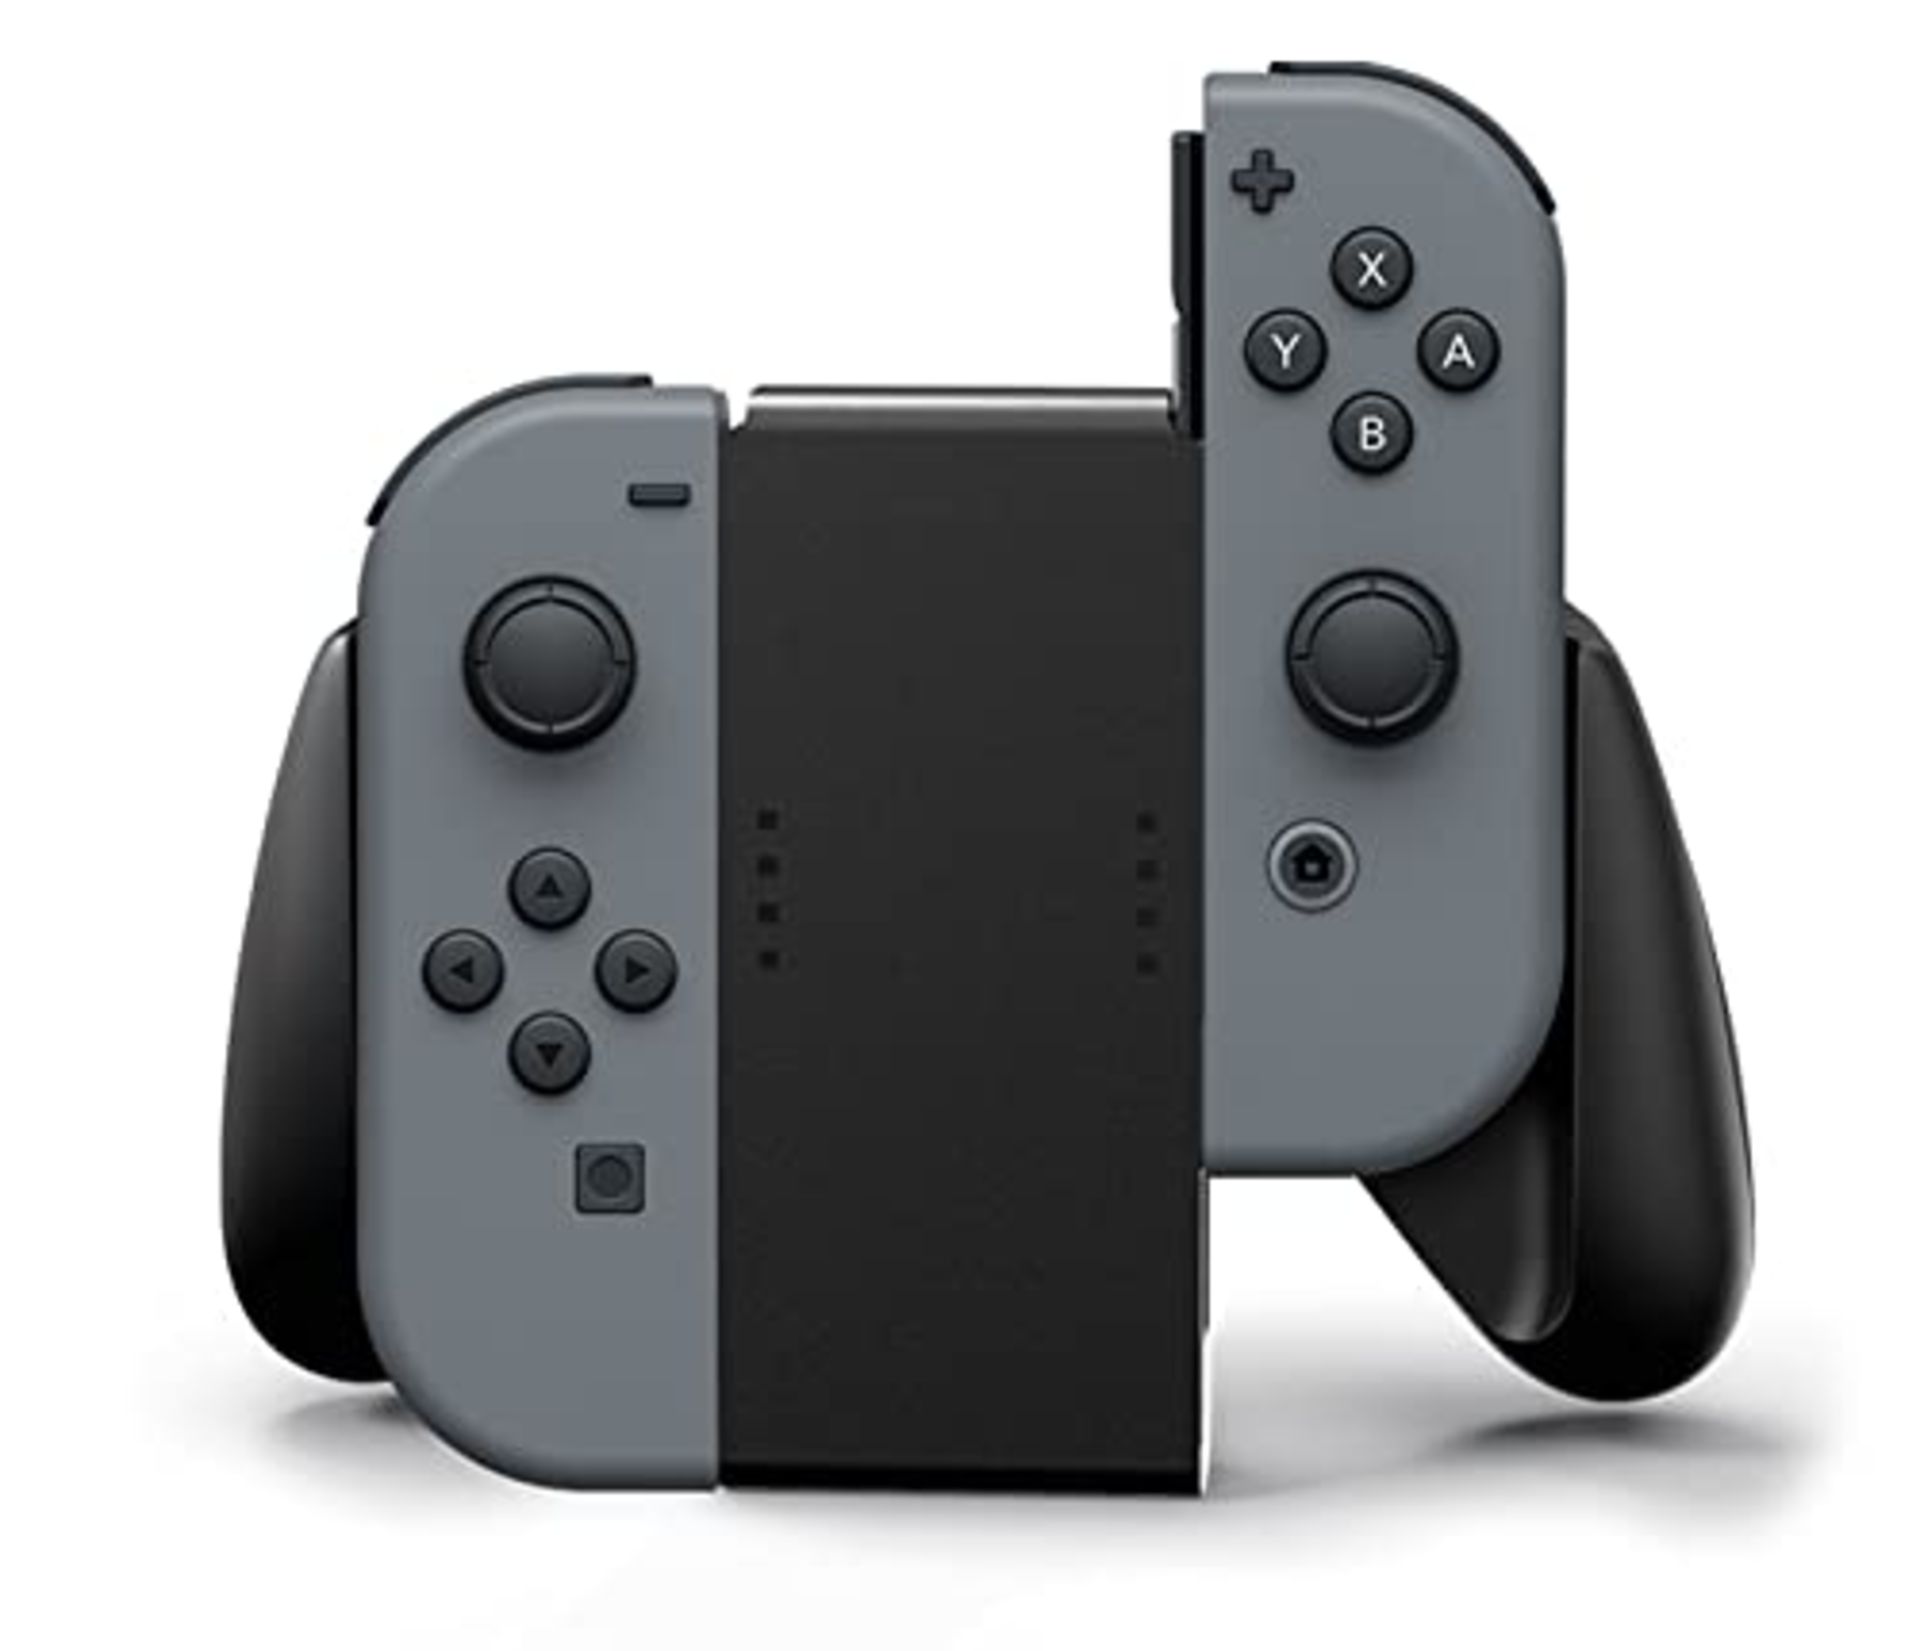 Joy-Con comfort grip for Nintendo Switch - Black - Image 4 of 6